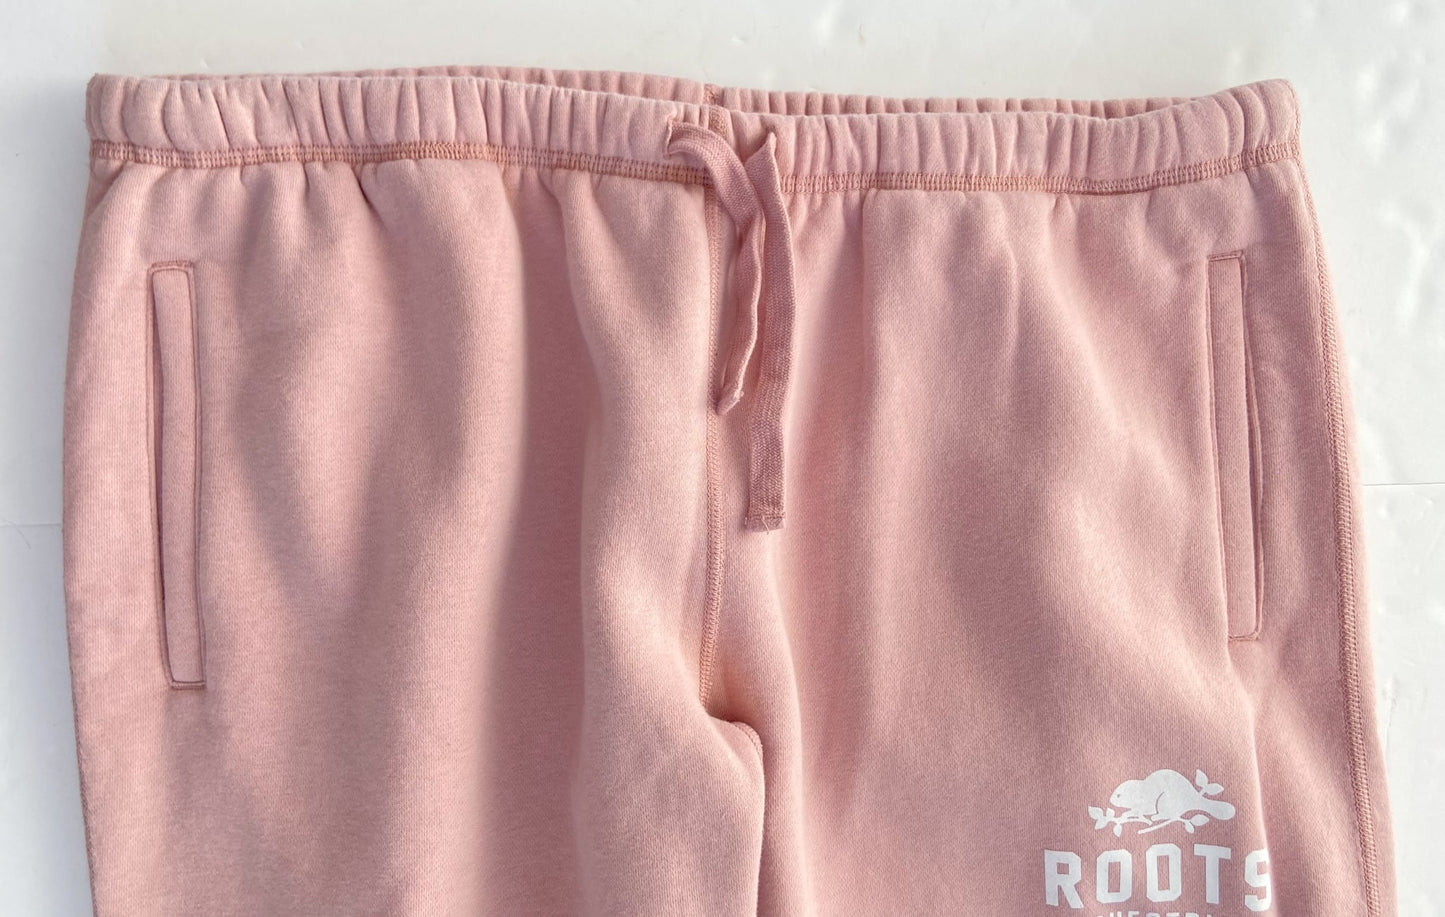 Roots Equestrian Sweatpants - Light Pink - Women's XL